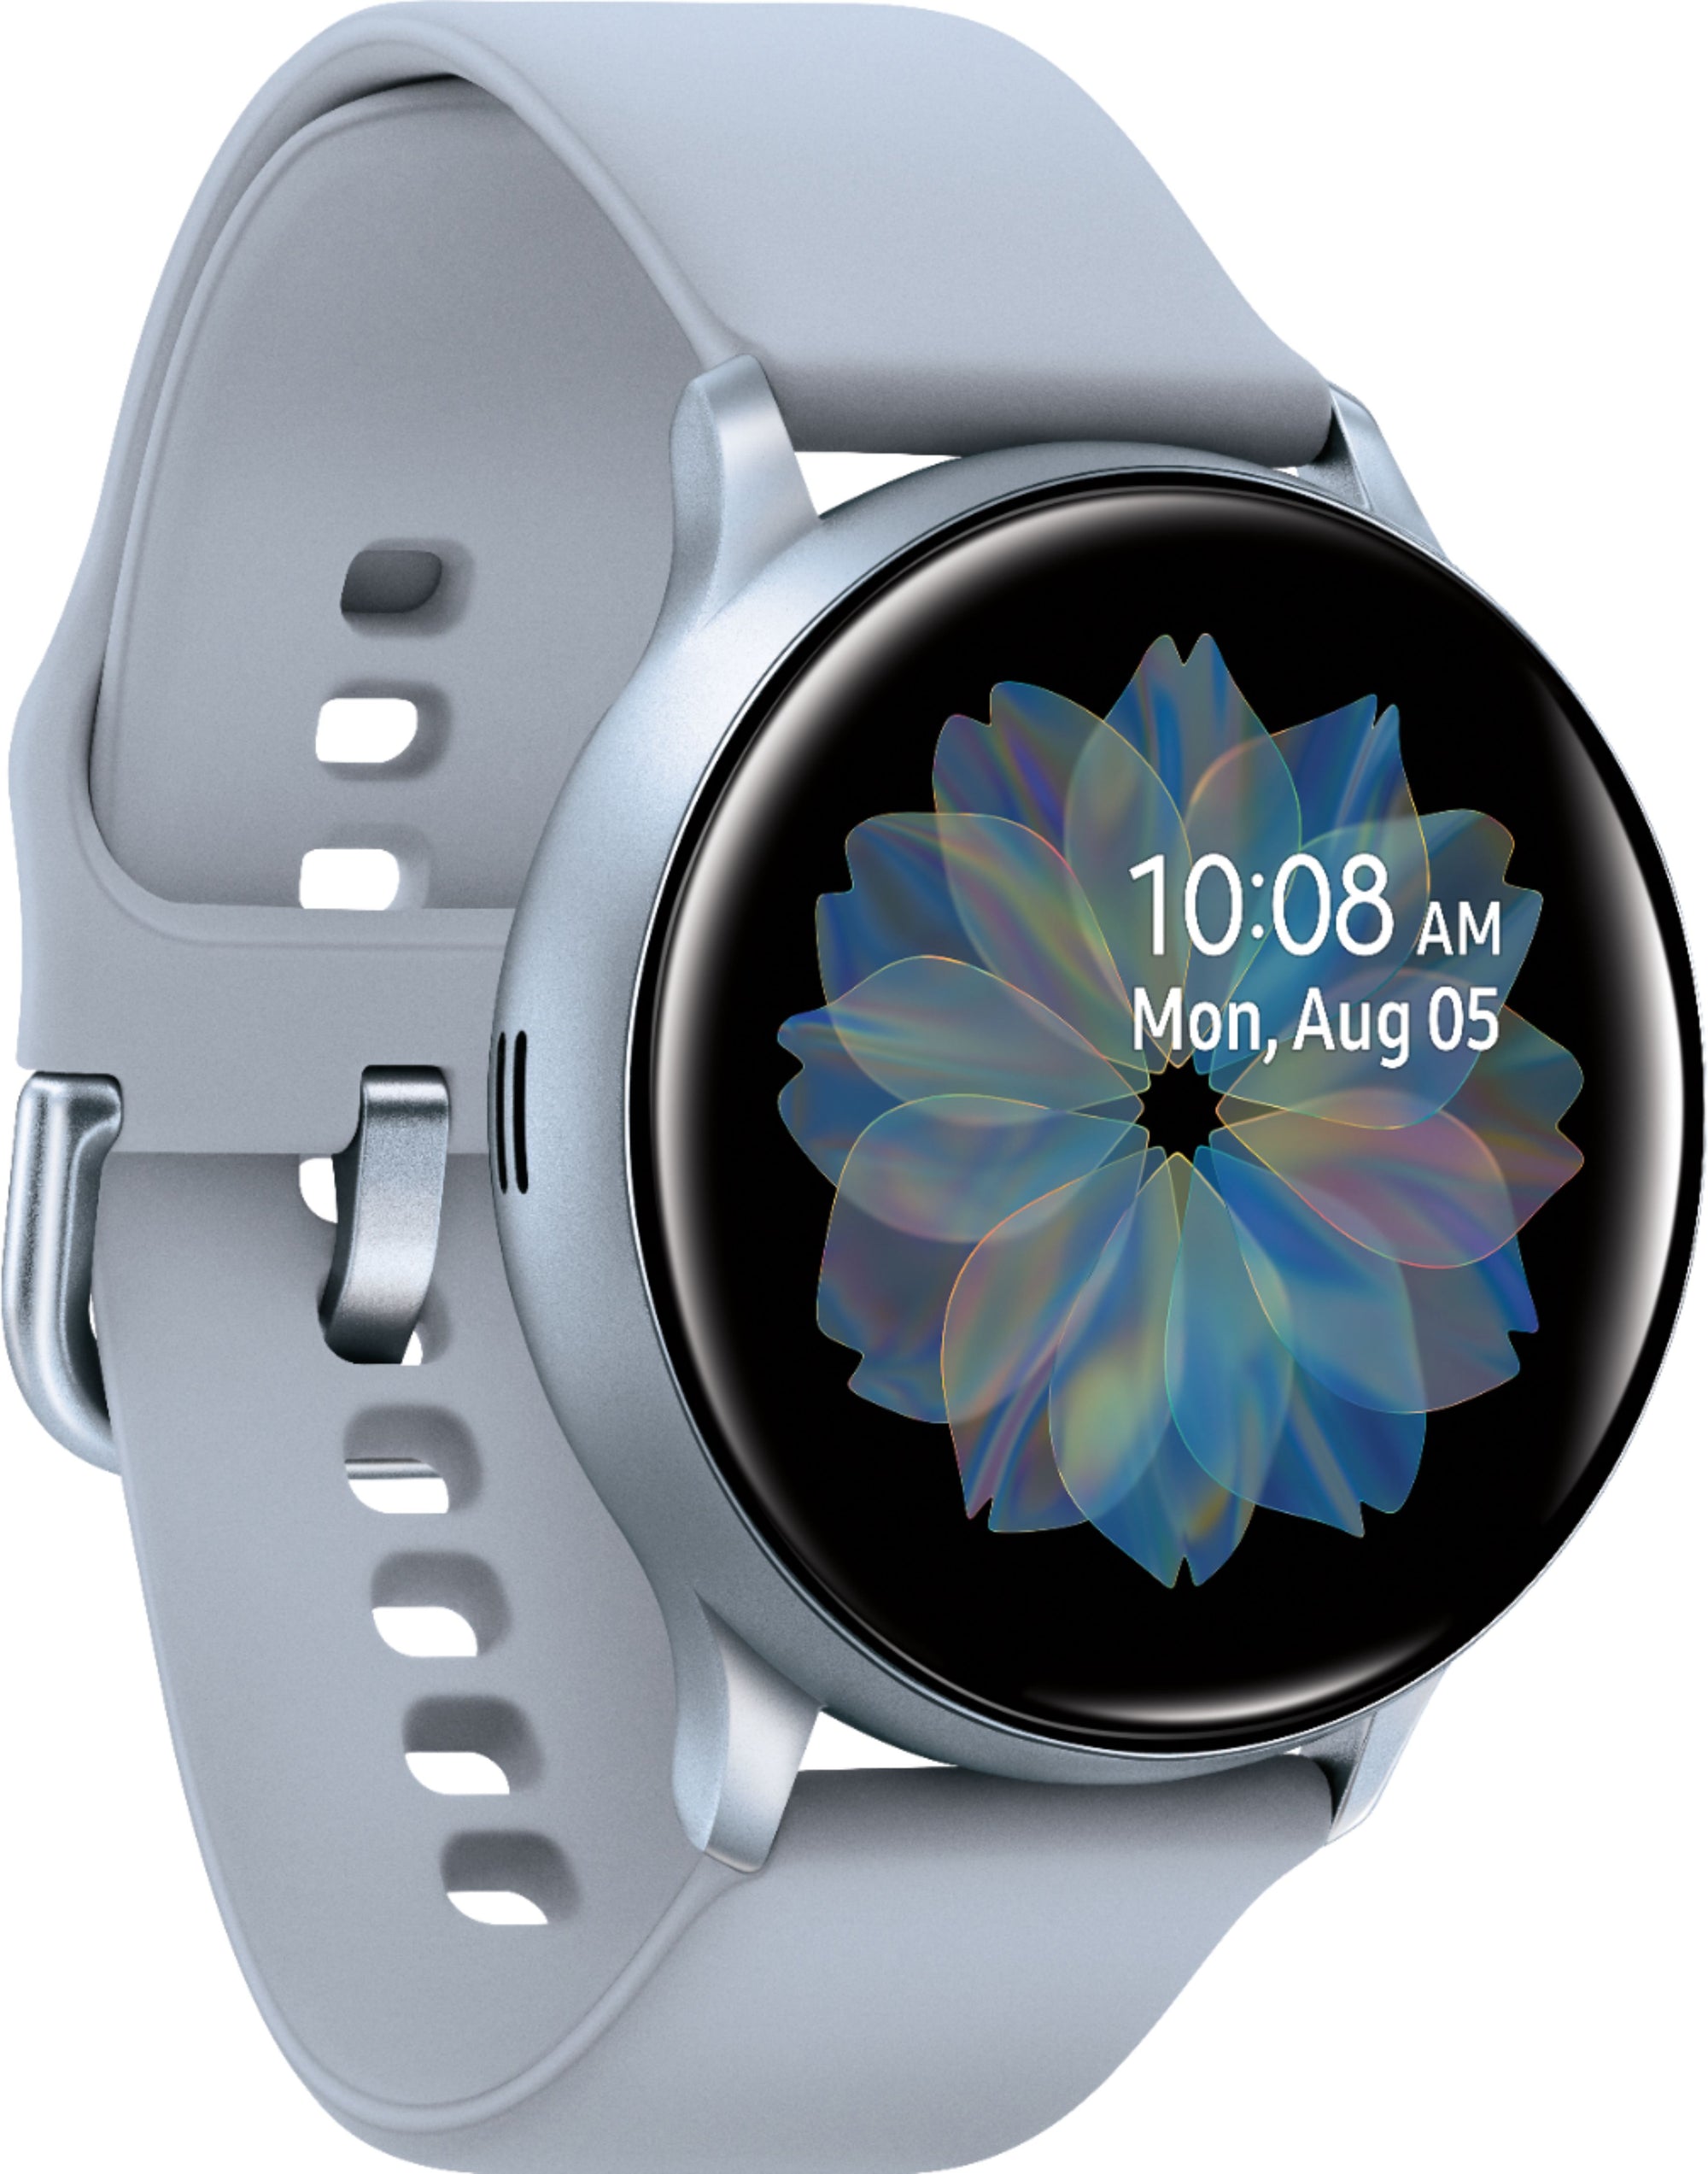 Samsung - SM-R830NZSAXAR Galaxy Watch Active2 Smartwatch 40mm Aluminum - Cloud Silver